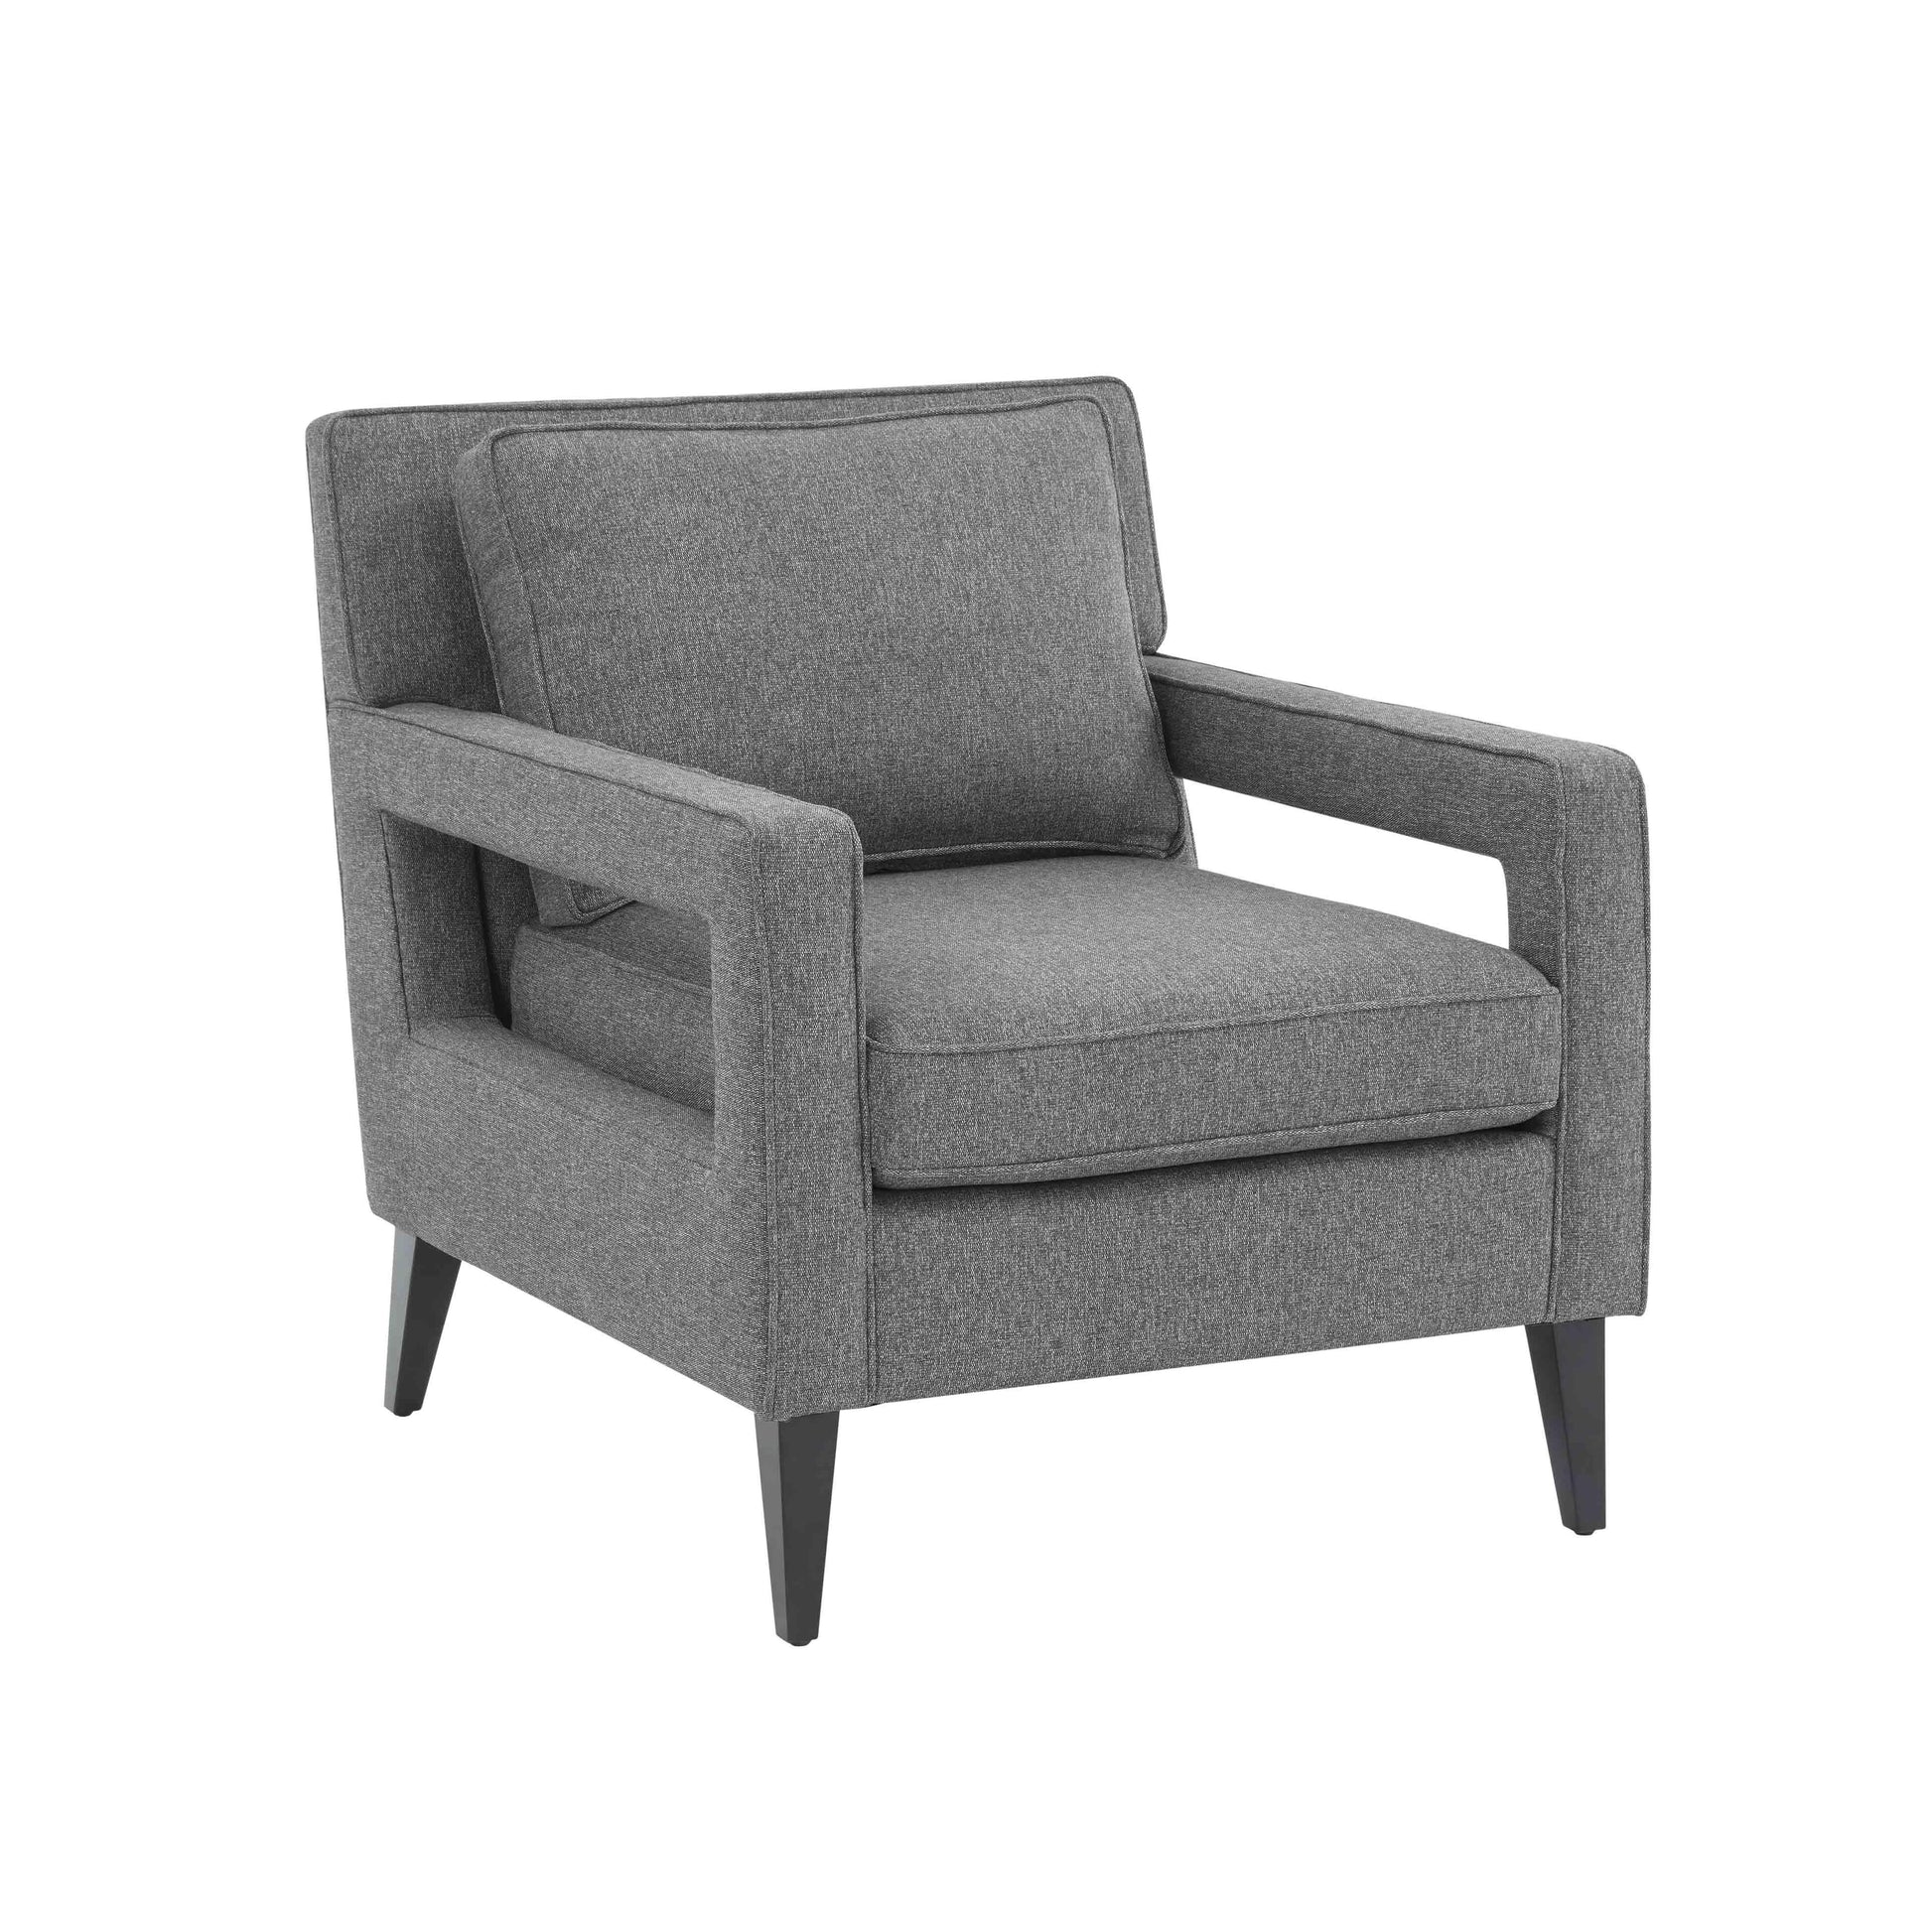 Tov Furniture Luna Gray Accent Chair